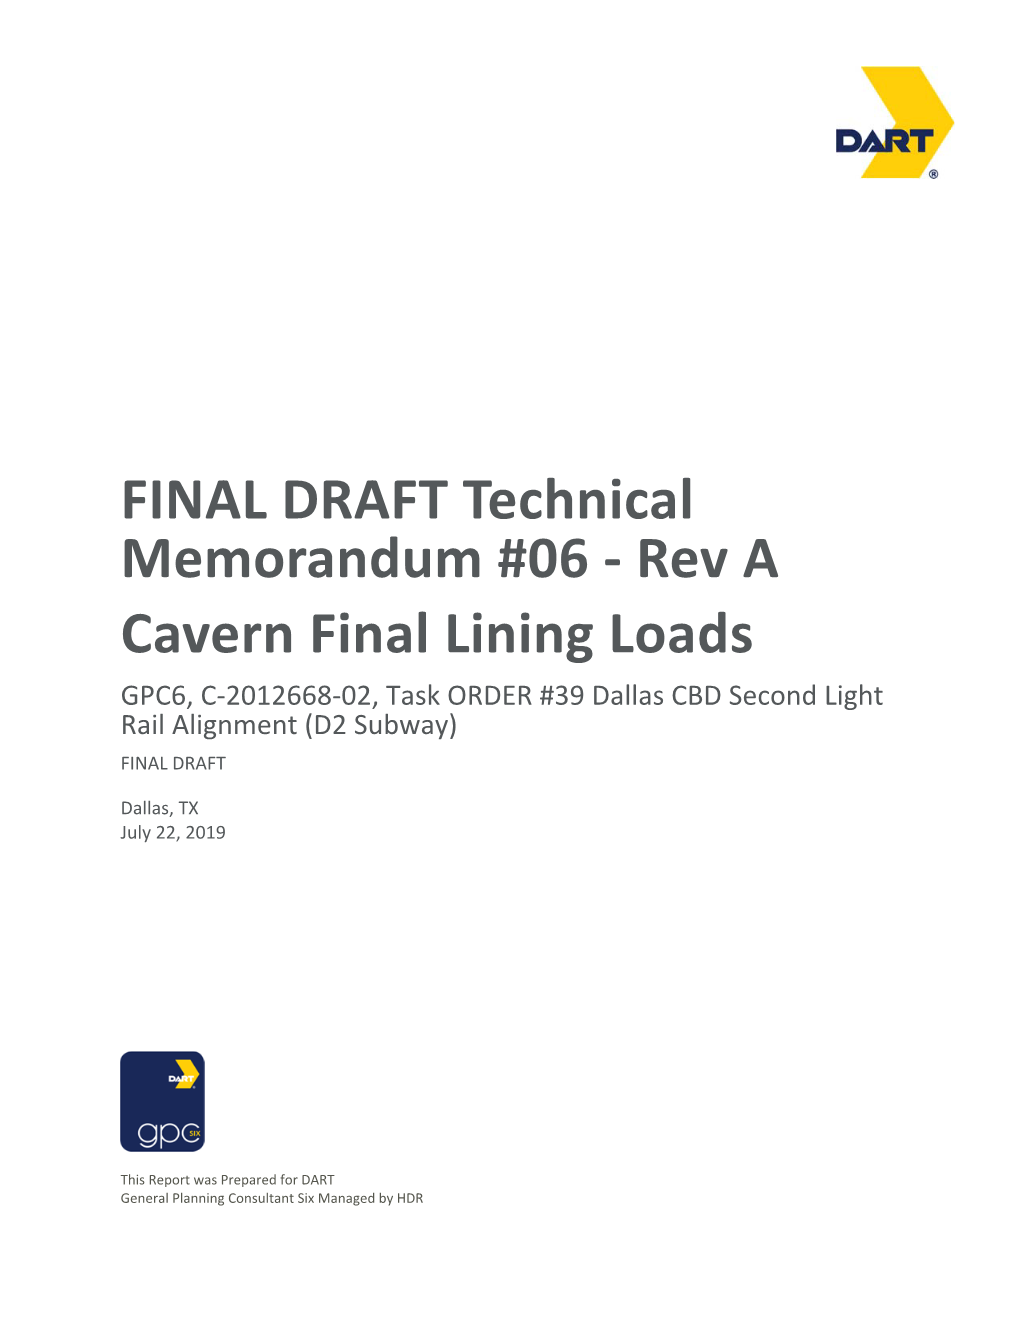 Cavern Final Lining Loads GPC6, C‐2012668‐02, Task ORDER #39 Dallas CBD Second Light Rail Alignment (D2 Subway) FINAL DRAFT